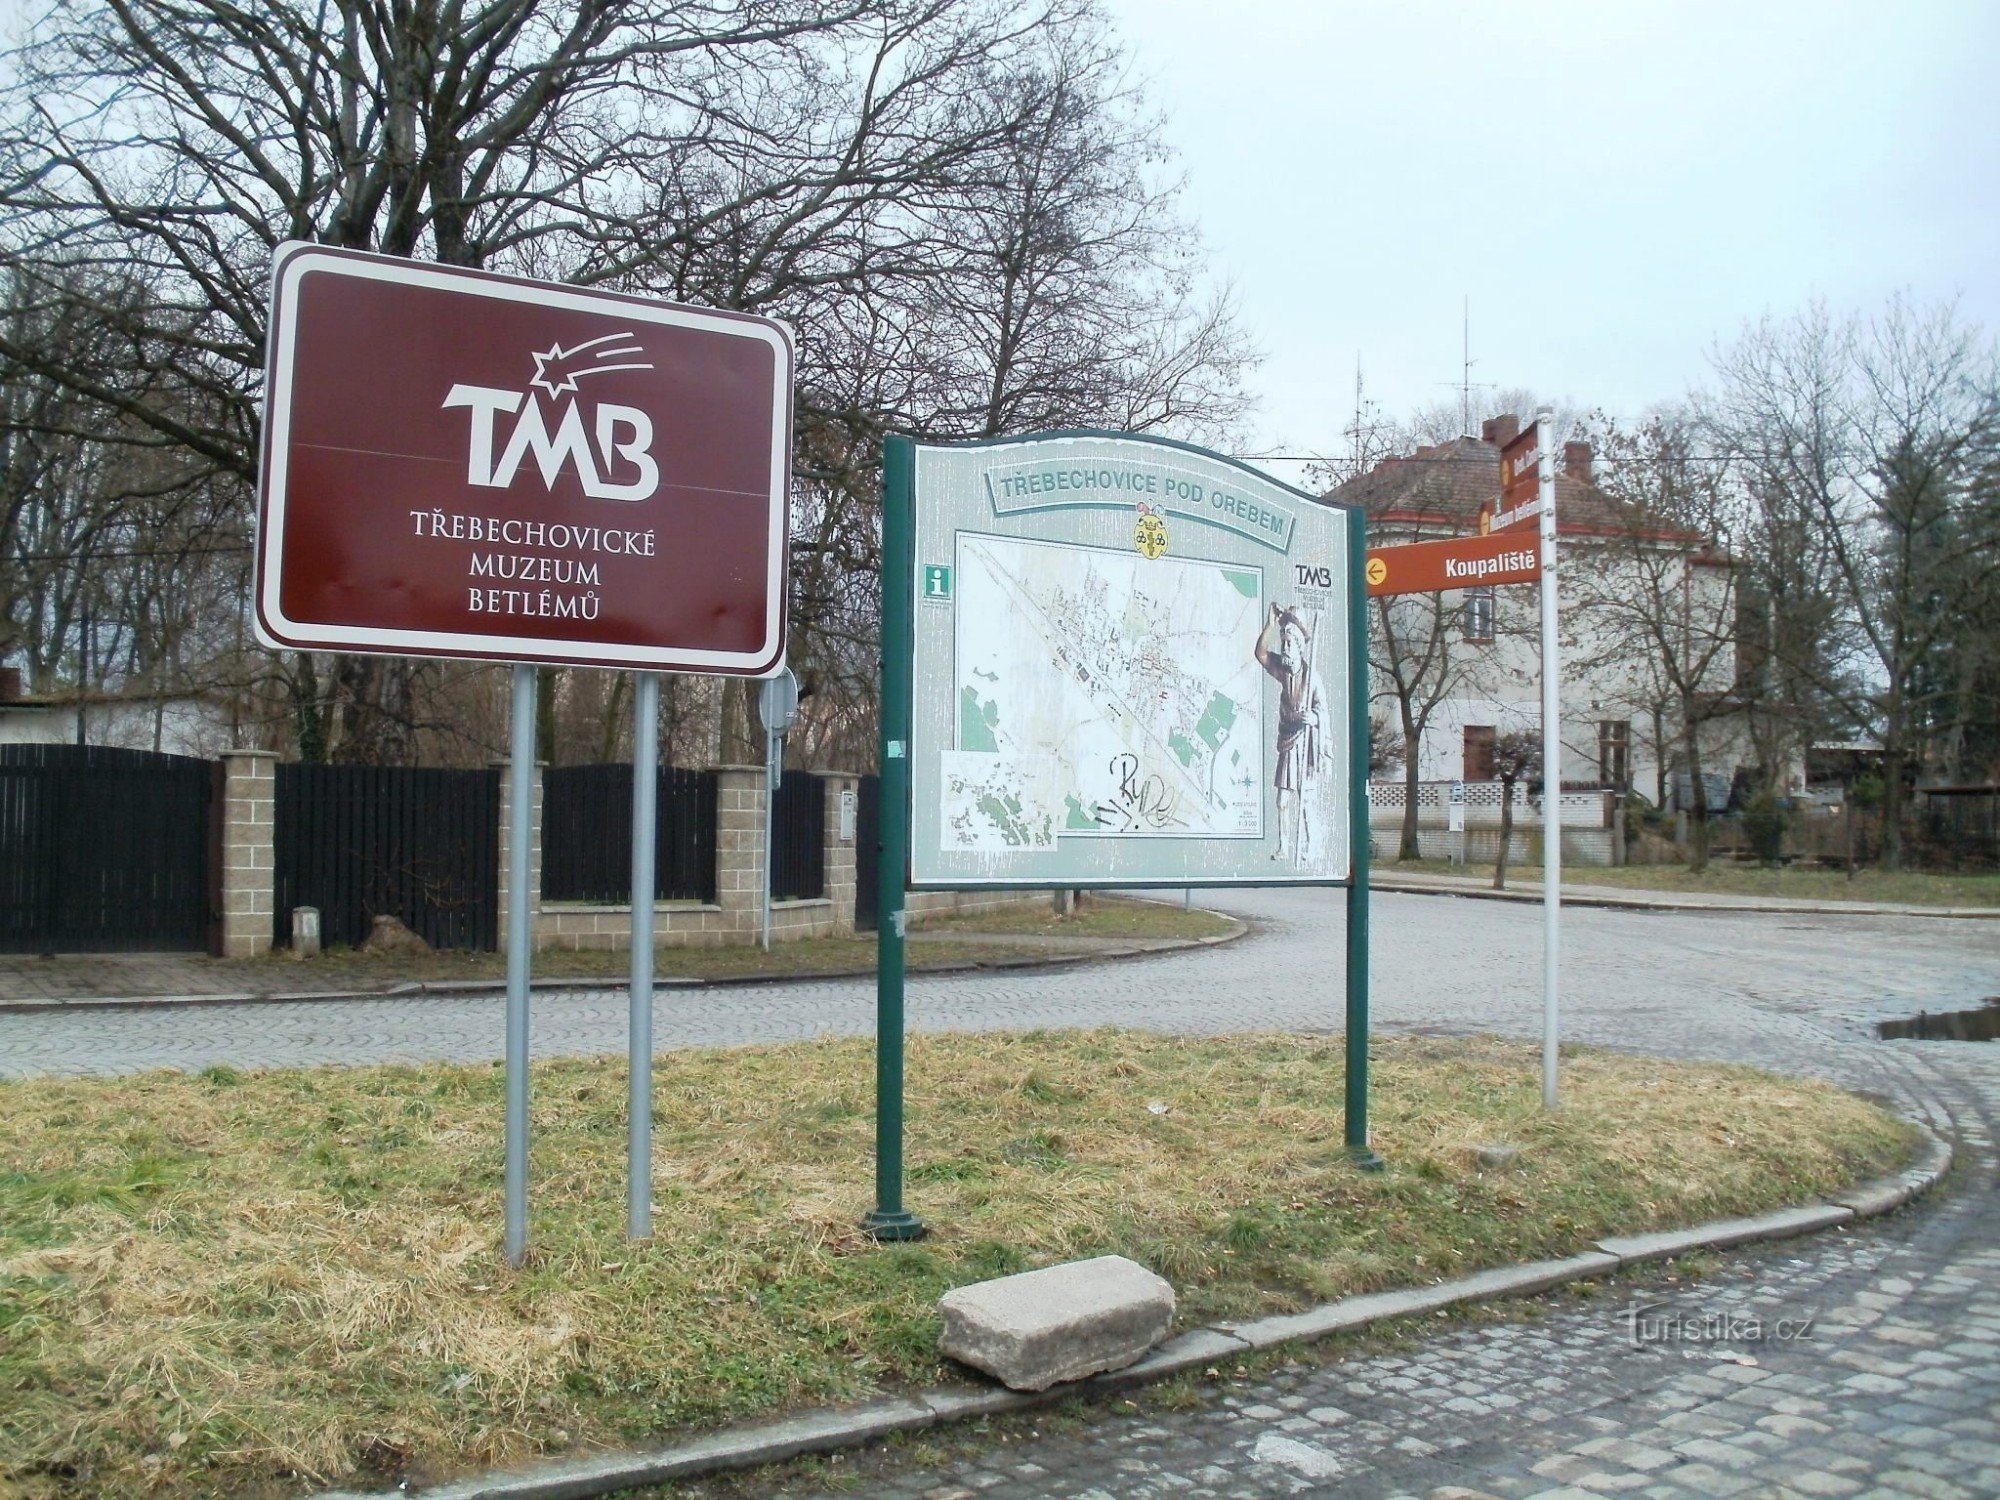 Touristenknotenpunkt Třebechovice pod Orebem - Bahnhof